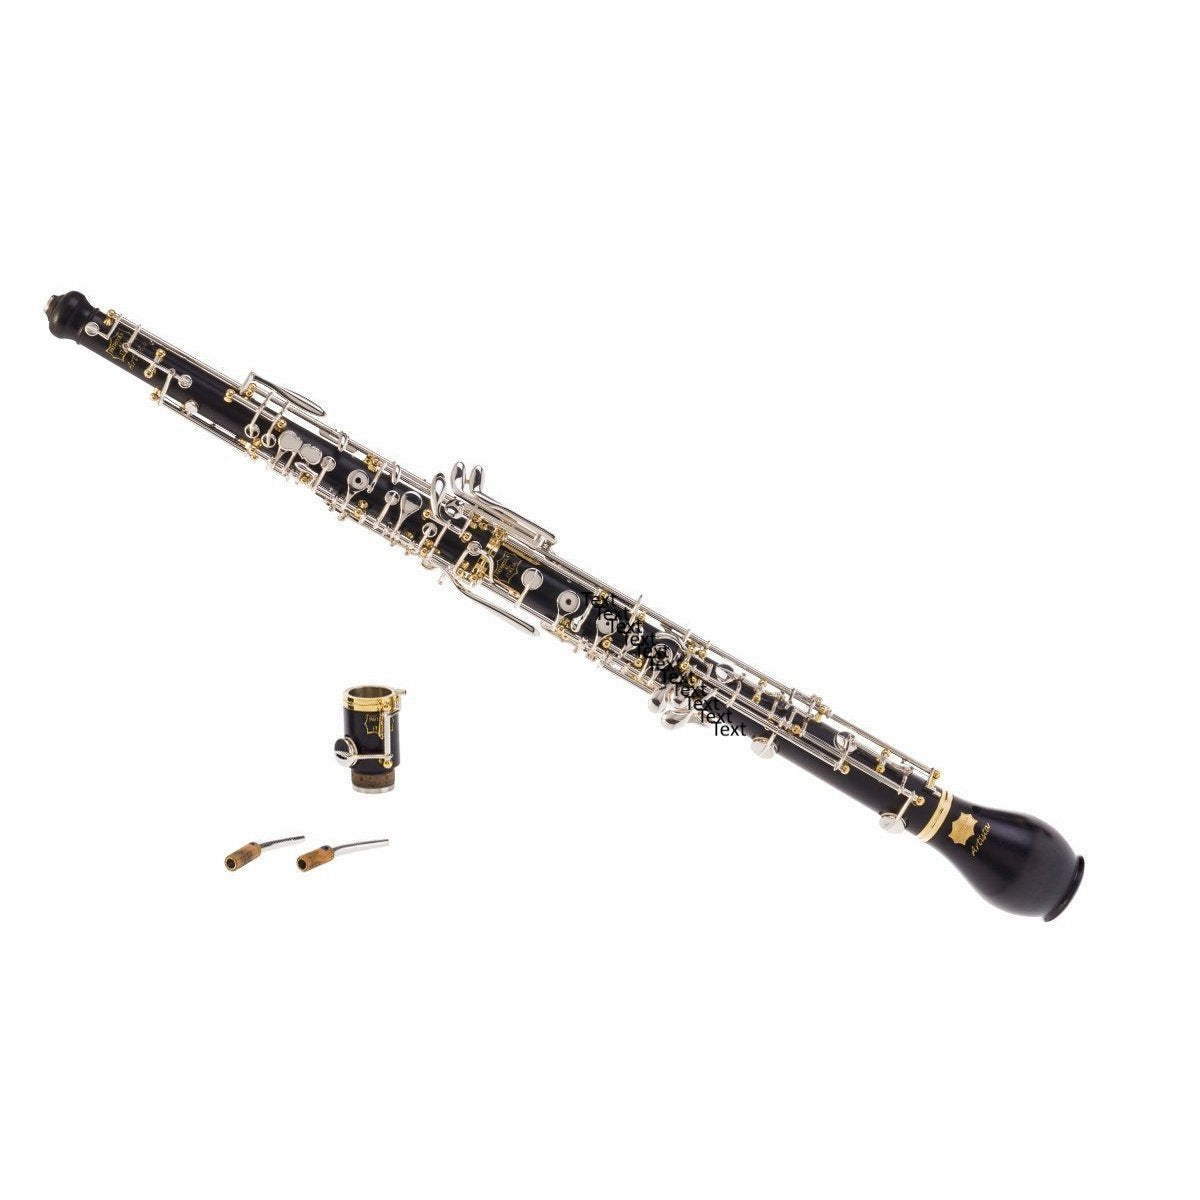 Patricola - Artista 4.0 PT.A1 Semi-Automatic Oboe Amore (Grenadilla with Silver-Plated Keys)